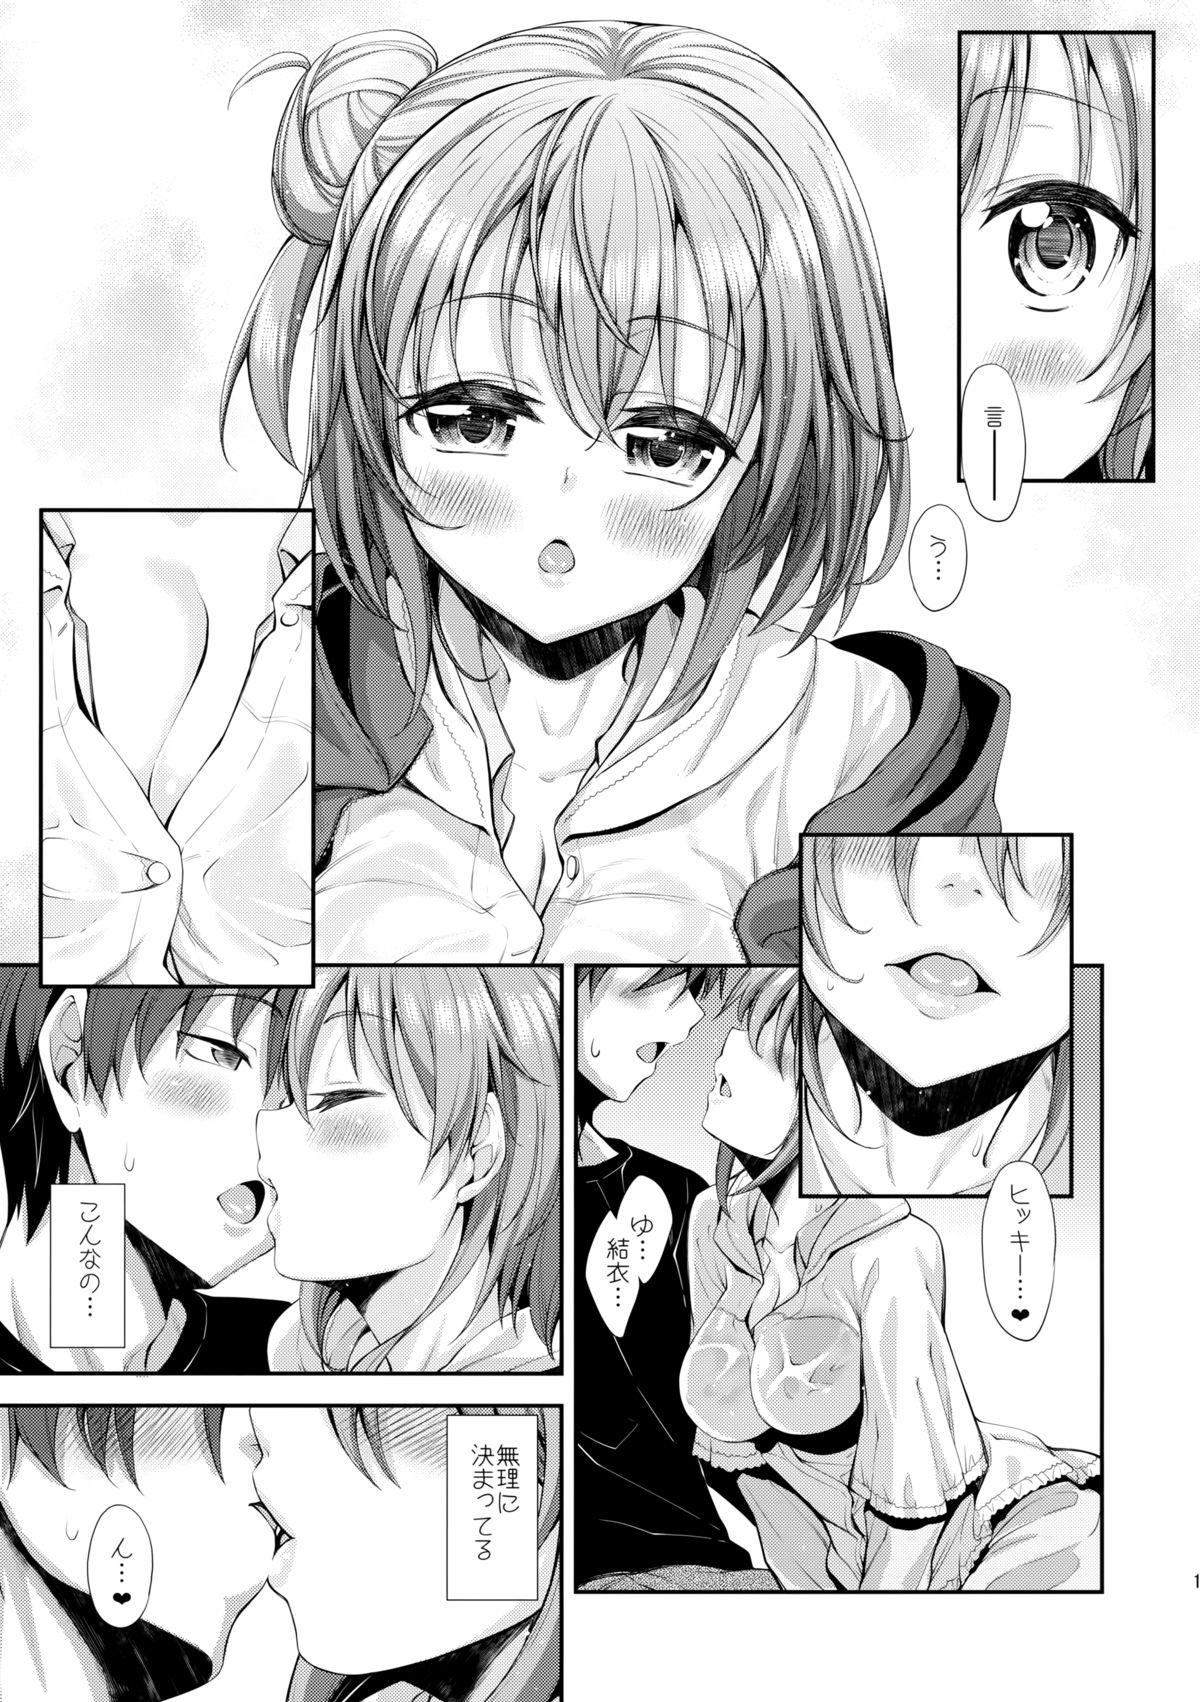 Perfect Butt LOVE STORY #01 - Yahari ore no seishun love come wa machigatteiru Super - Page 10